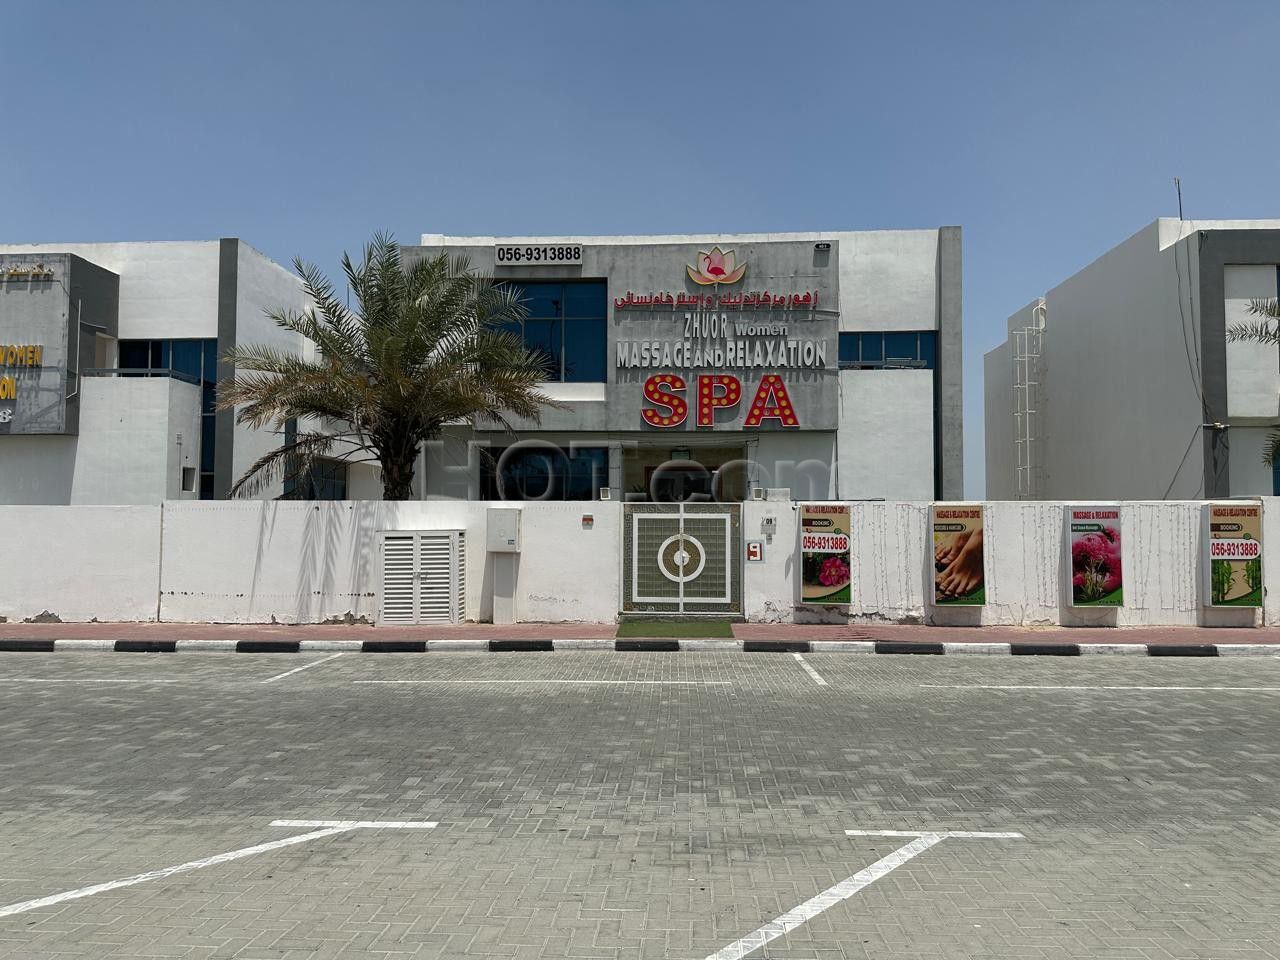 Ajman City, United Arab Emirates Zhuor Massage and Relaxation Spa